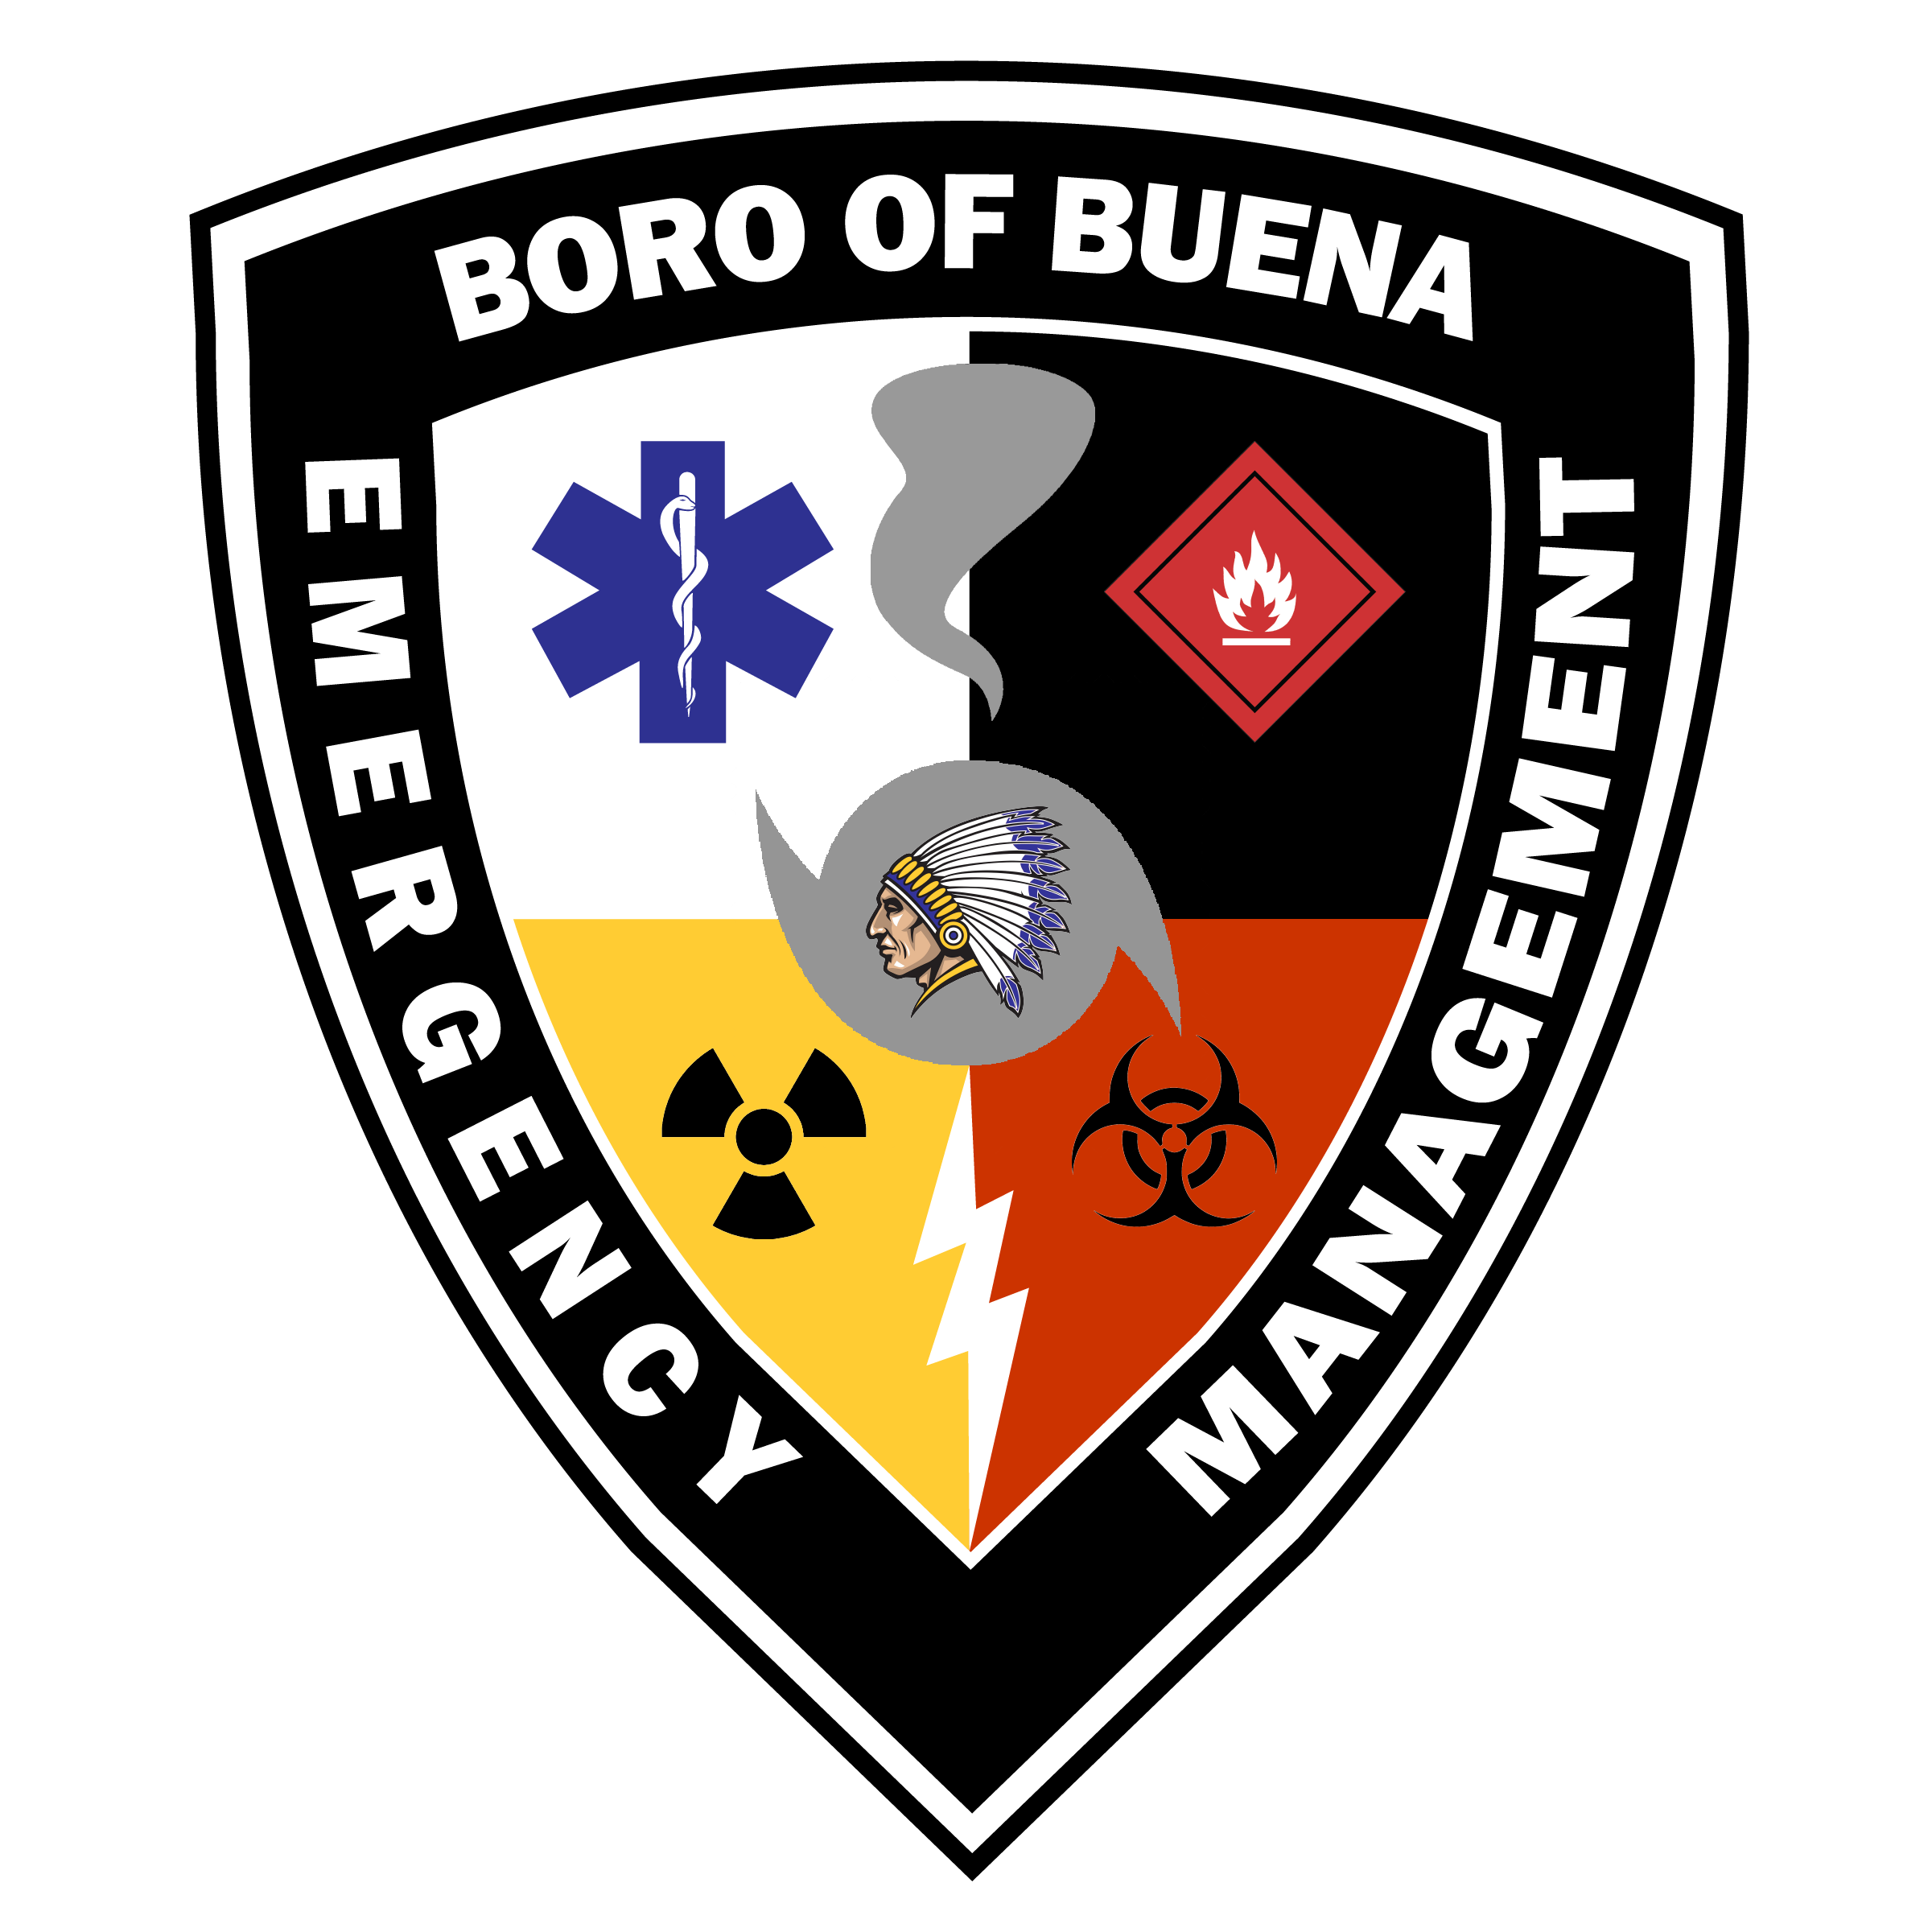 Borough of BuenaOffice of Emergency Management